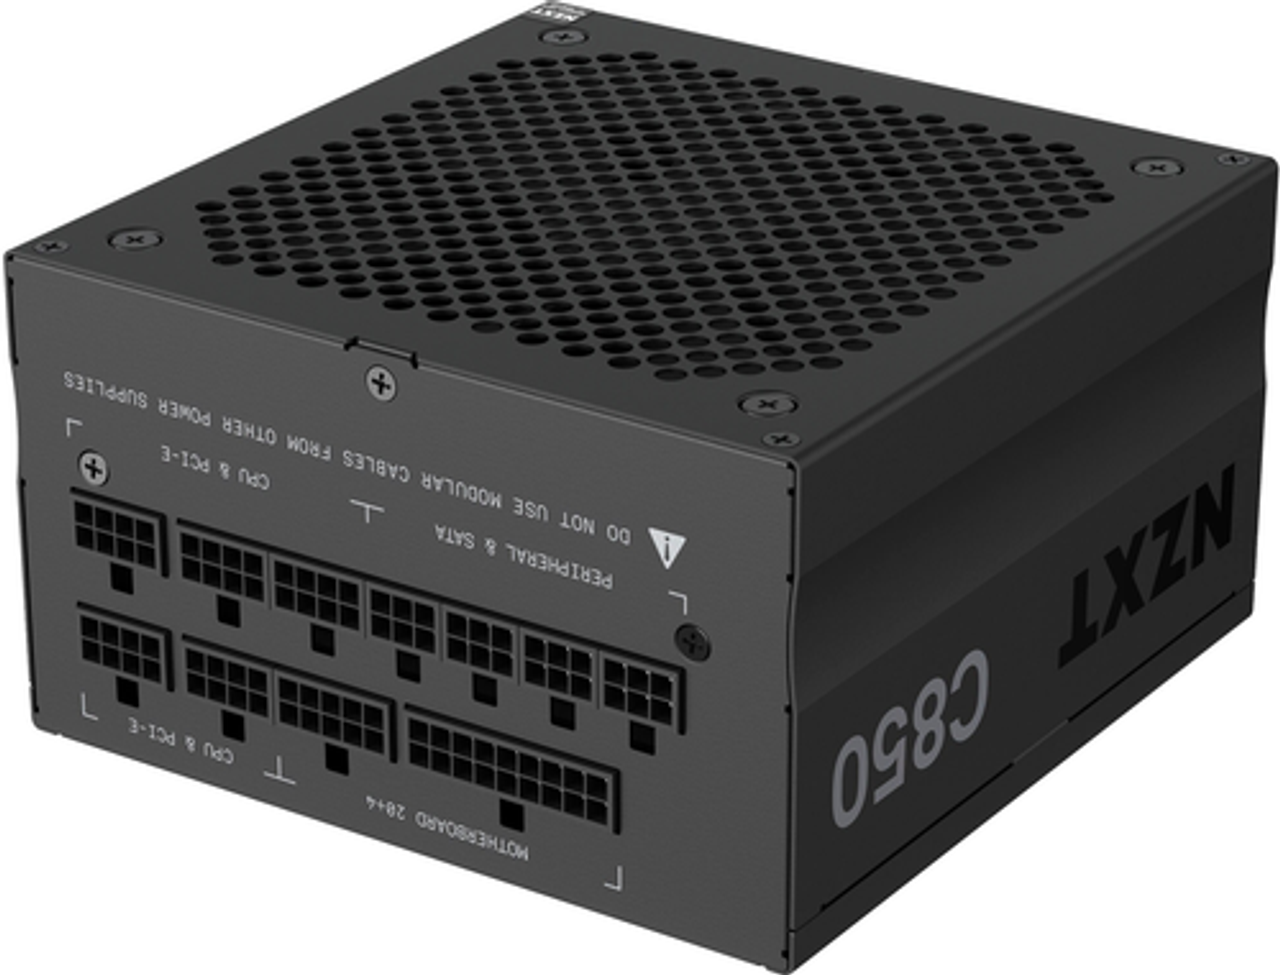 NZXT - C-850 ATX Gaming Power Supply - Black